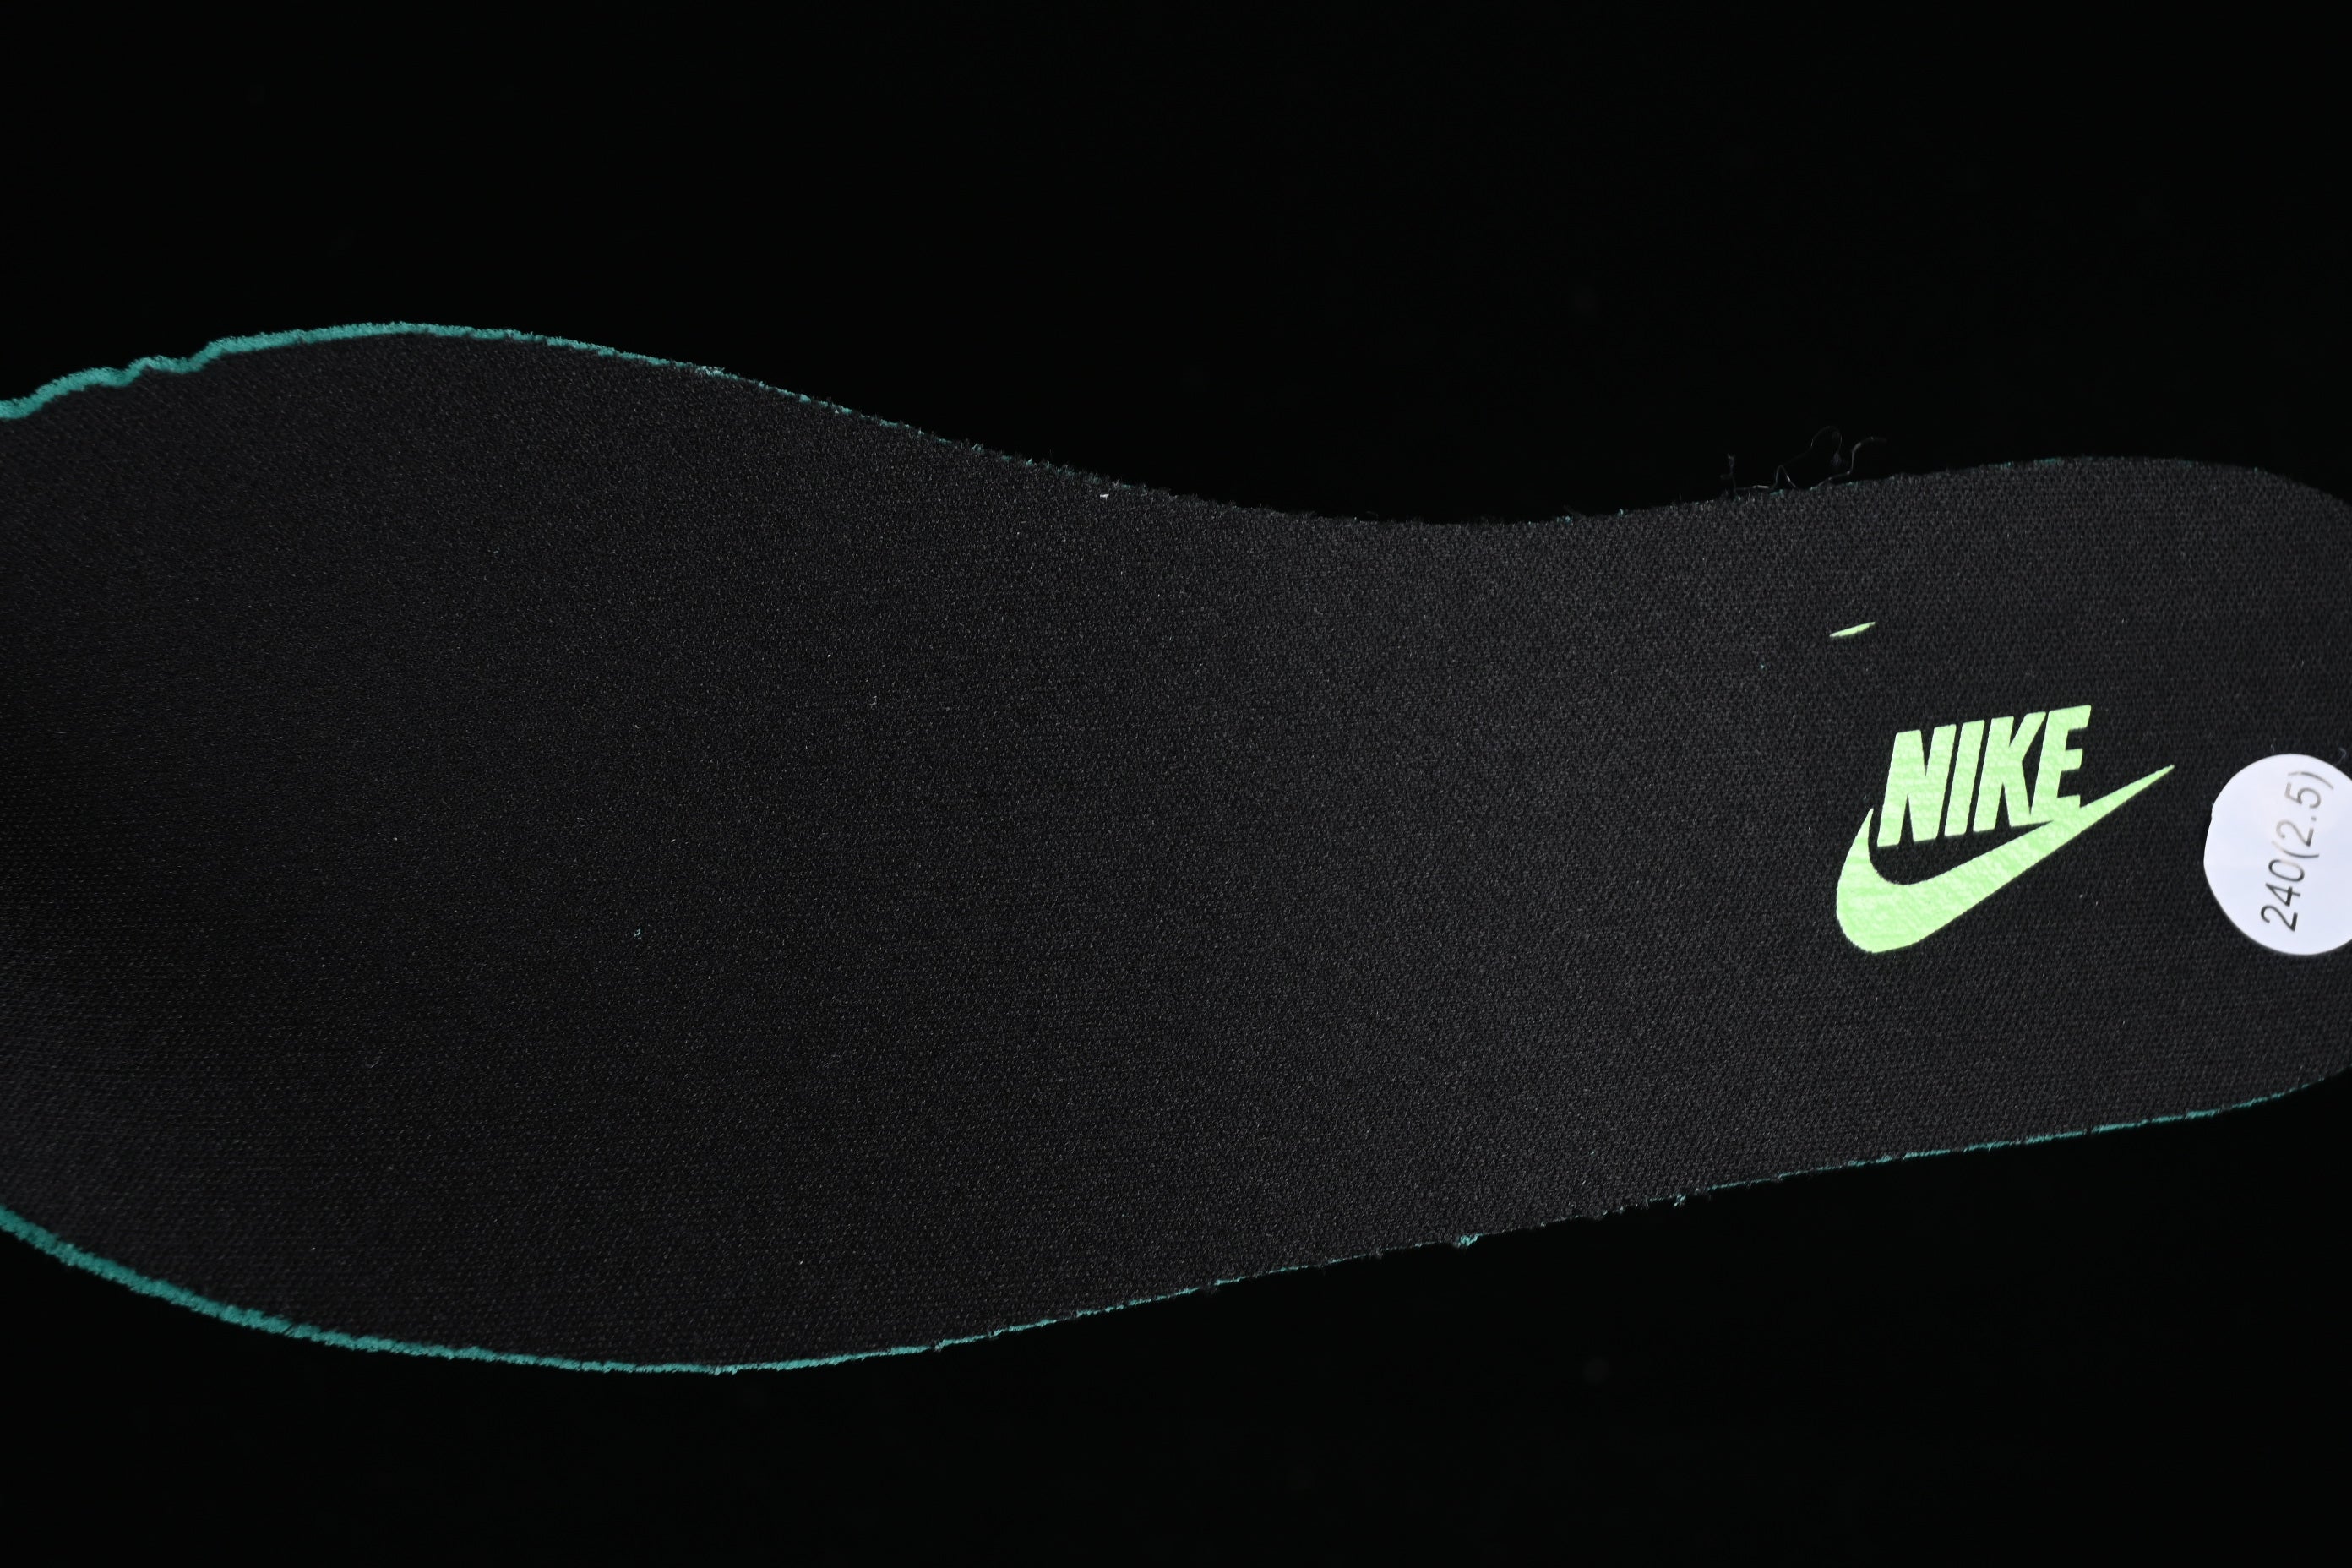 NikeMens Motiva - Multi